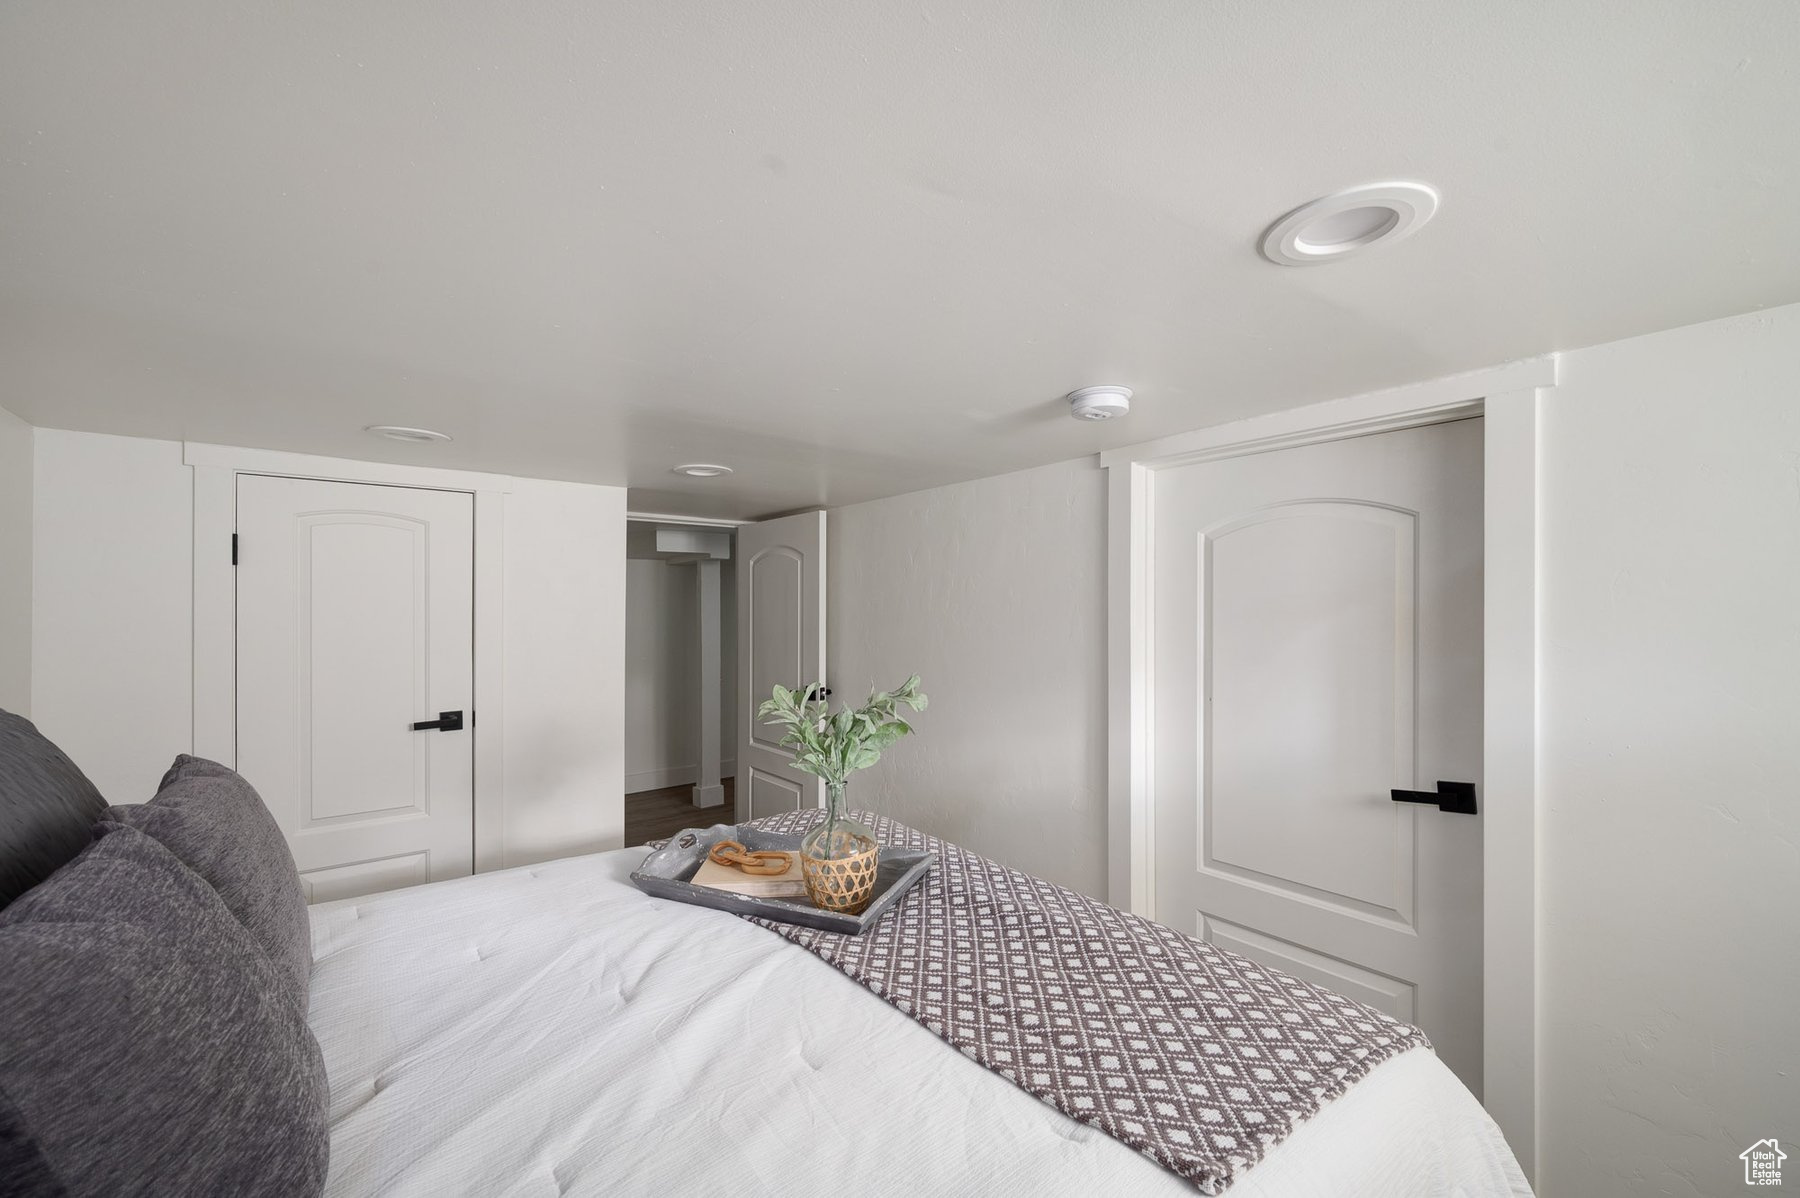 Basement bedroom with a closet